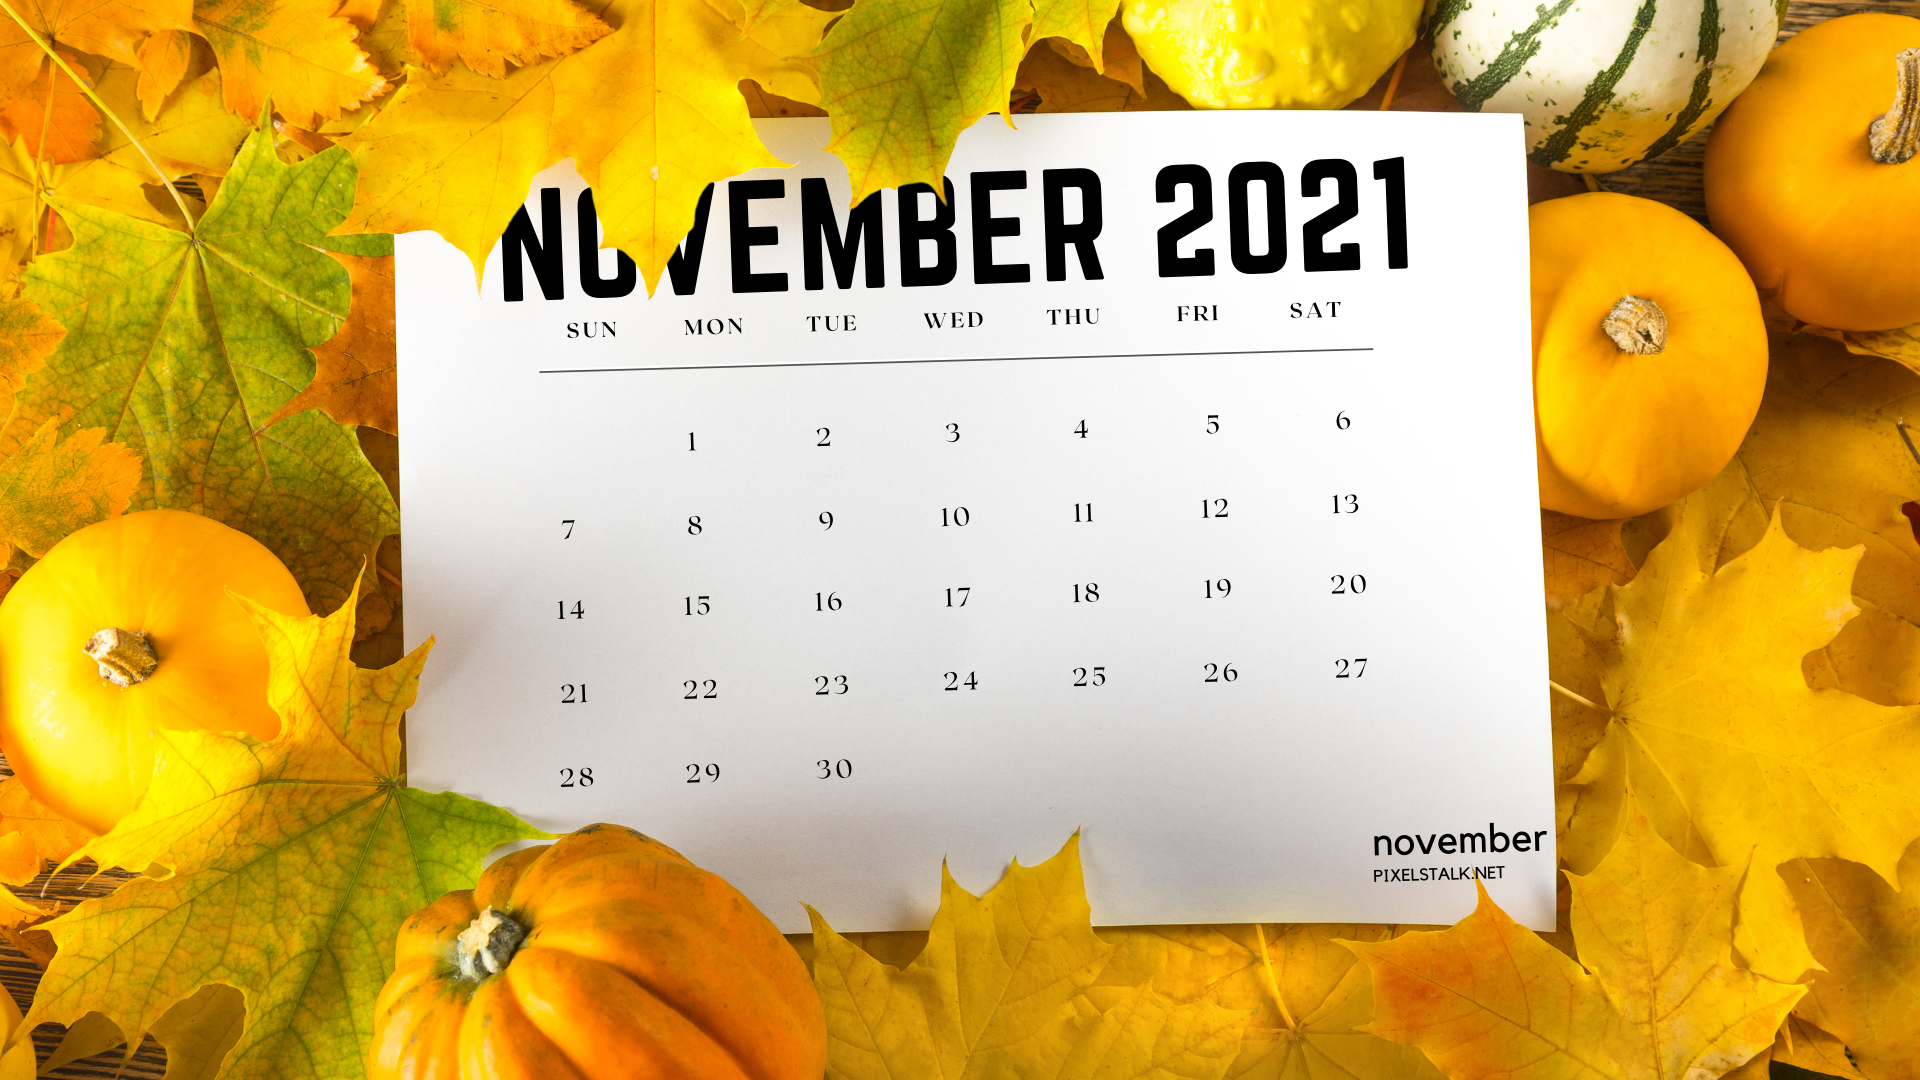 November 2021 Calendar Wallpaper